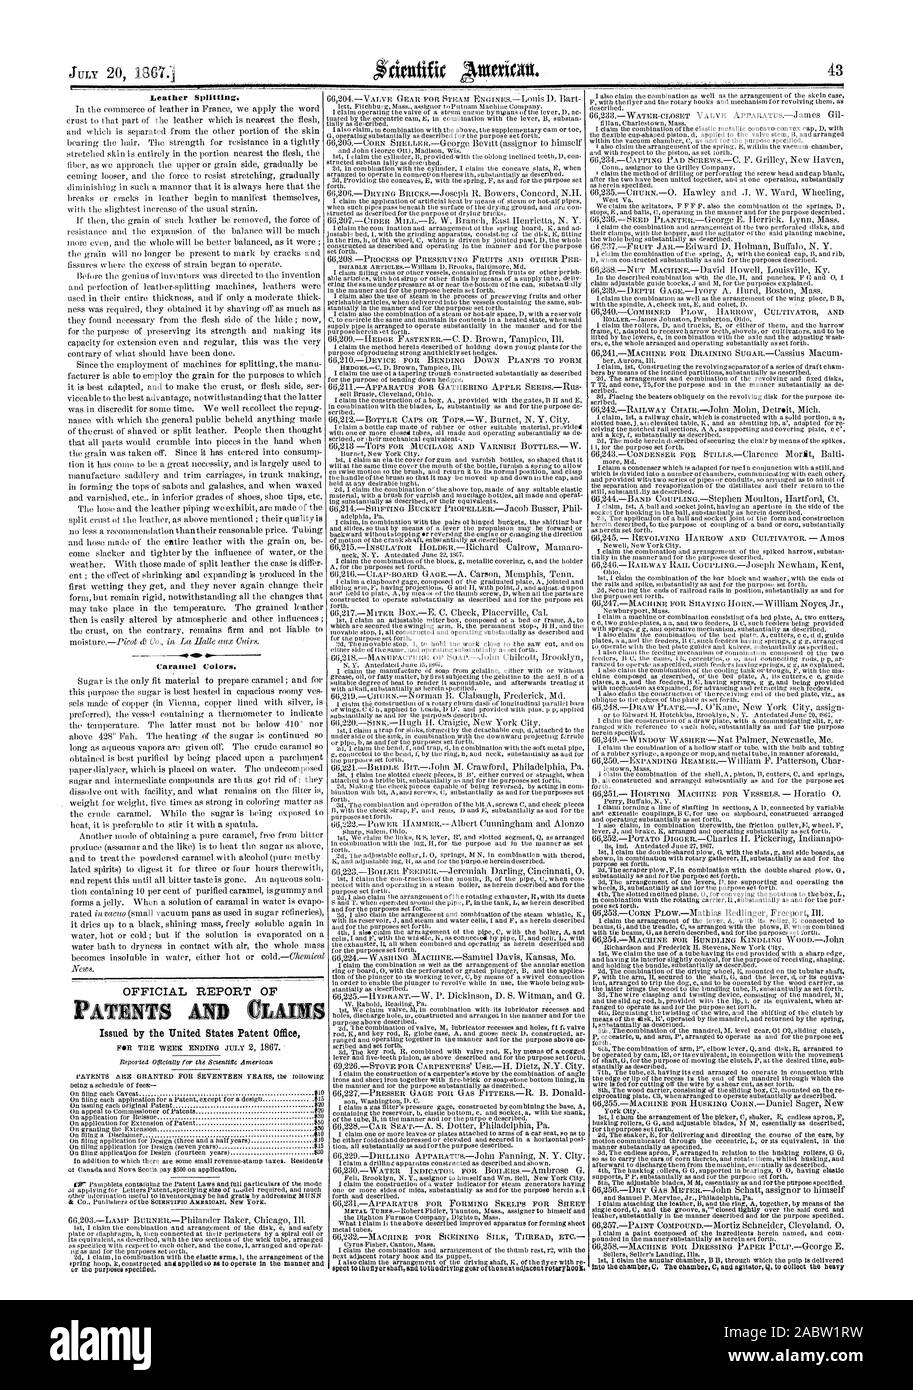 Leder aufteilen. Caramel Farben., Scientific American, 1867-07-20 Stockfoto